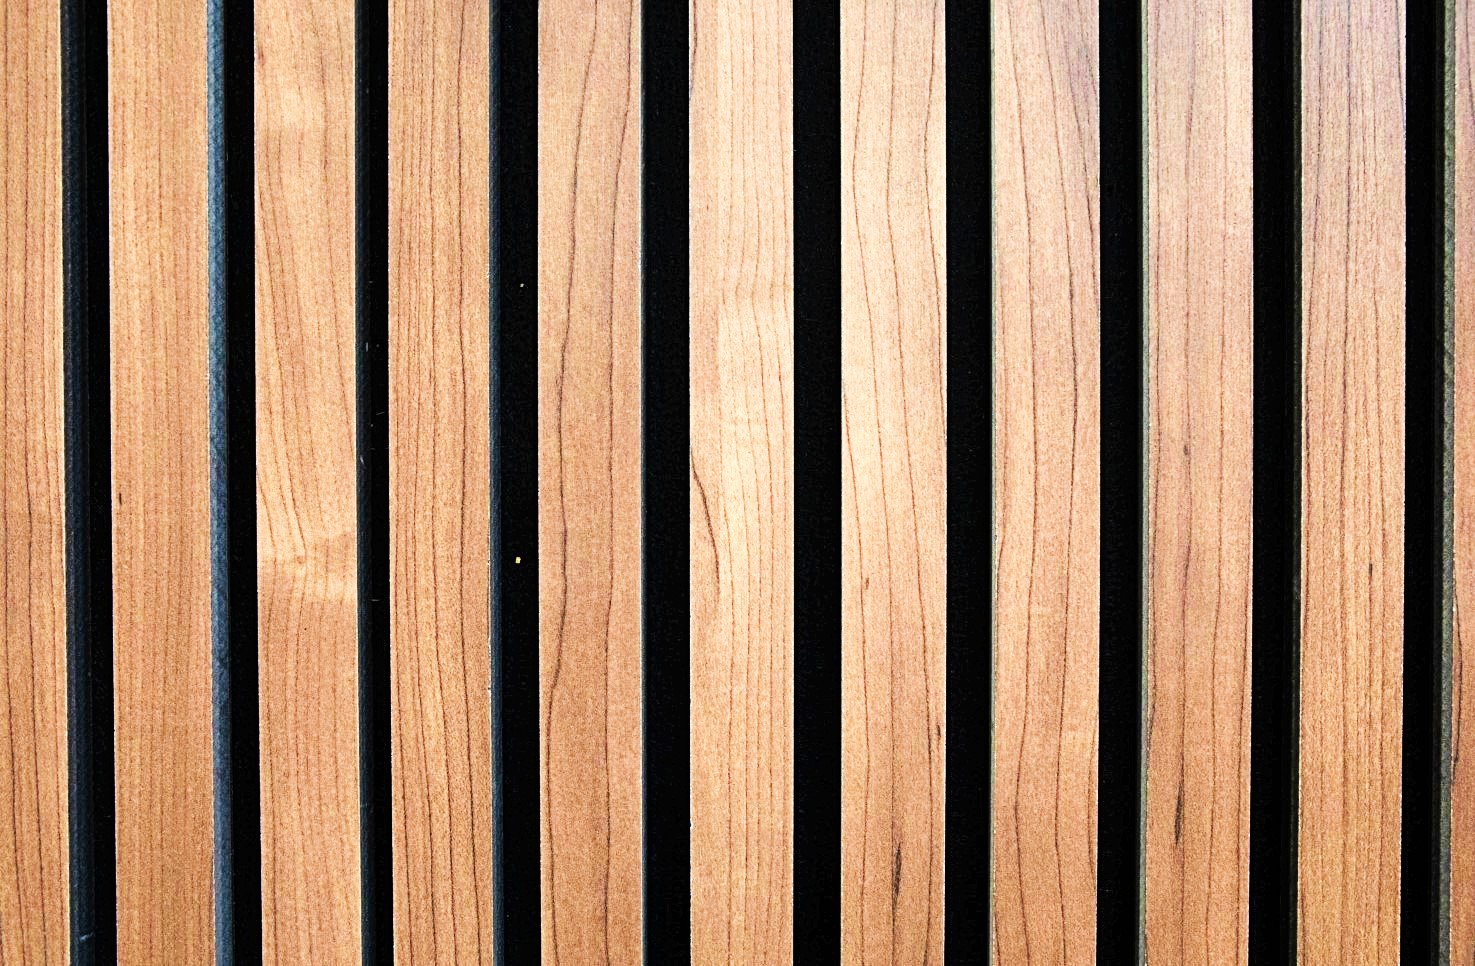 Decraslat acoustic timber panels